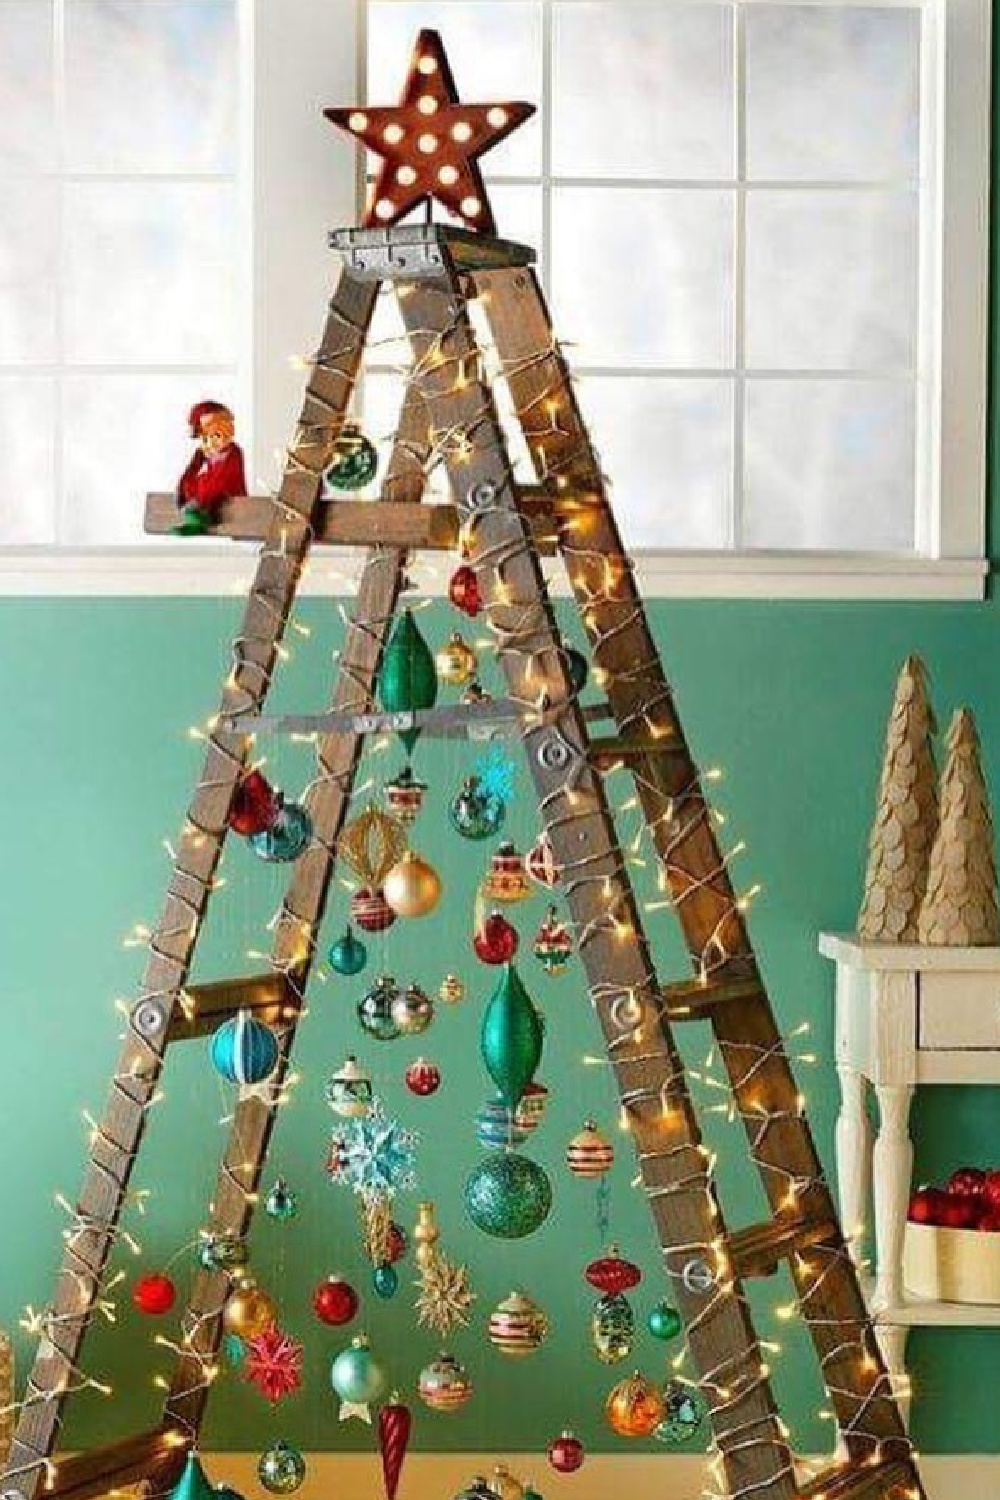 Christmas tree ladder idea for an alternative tree - @adolfson_interior. #laddertree #christmastreeladder #alternativechristmastree